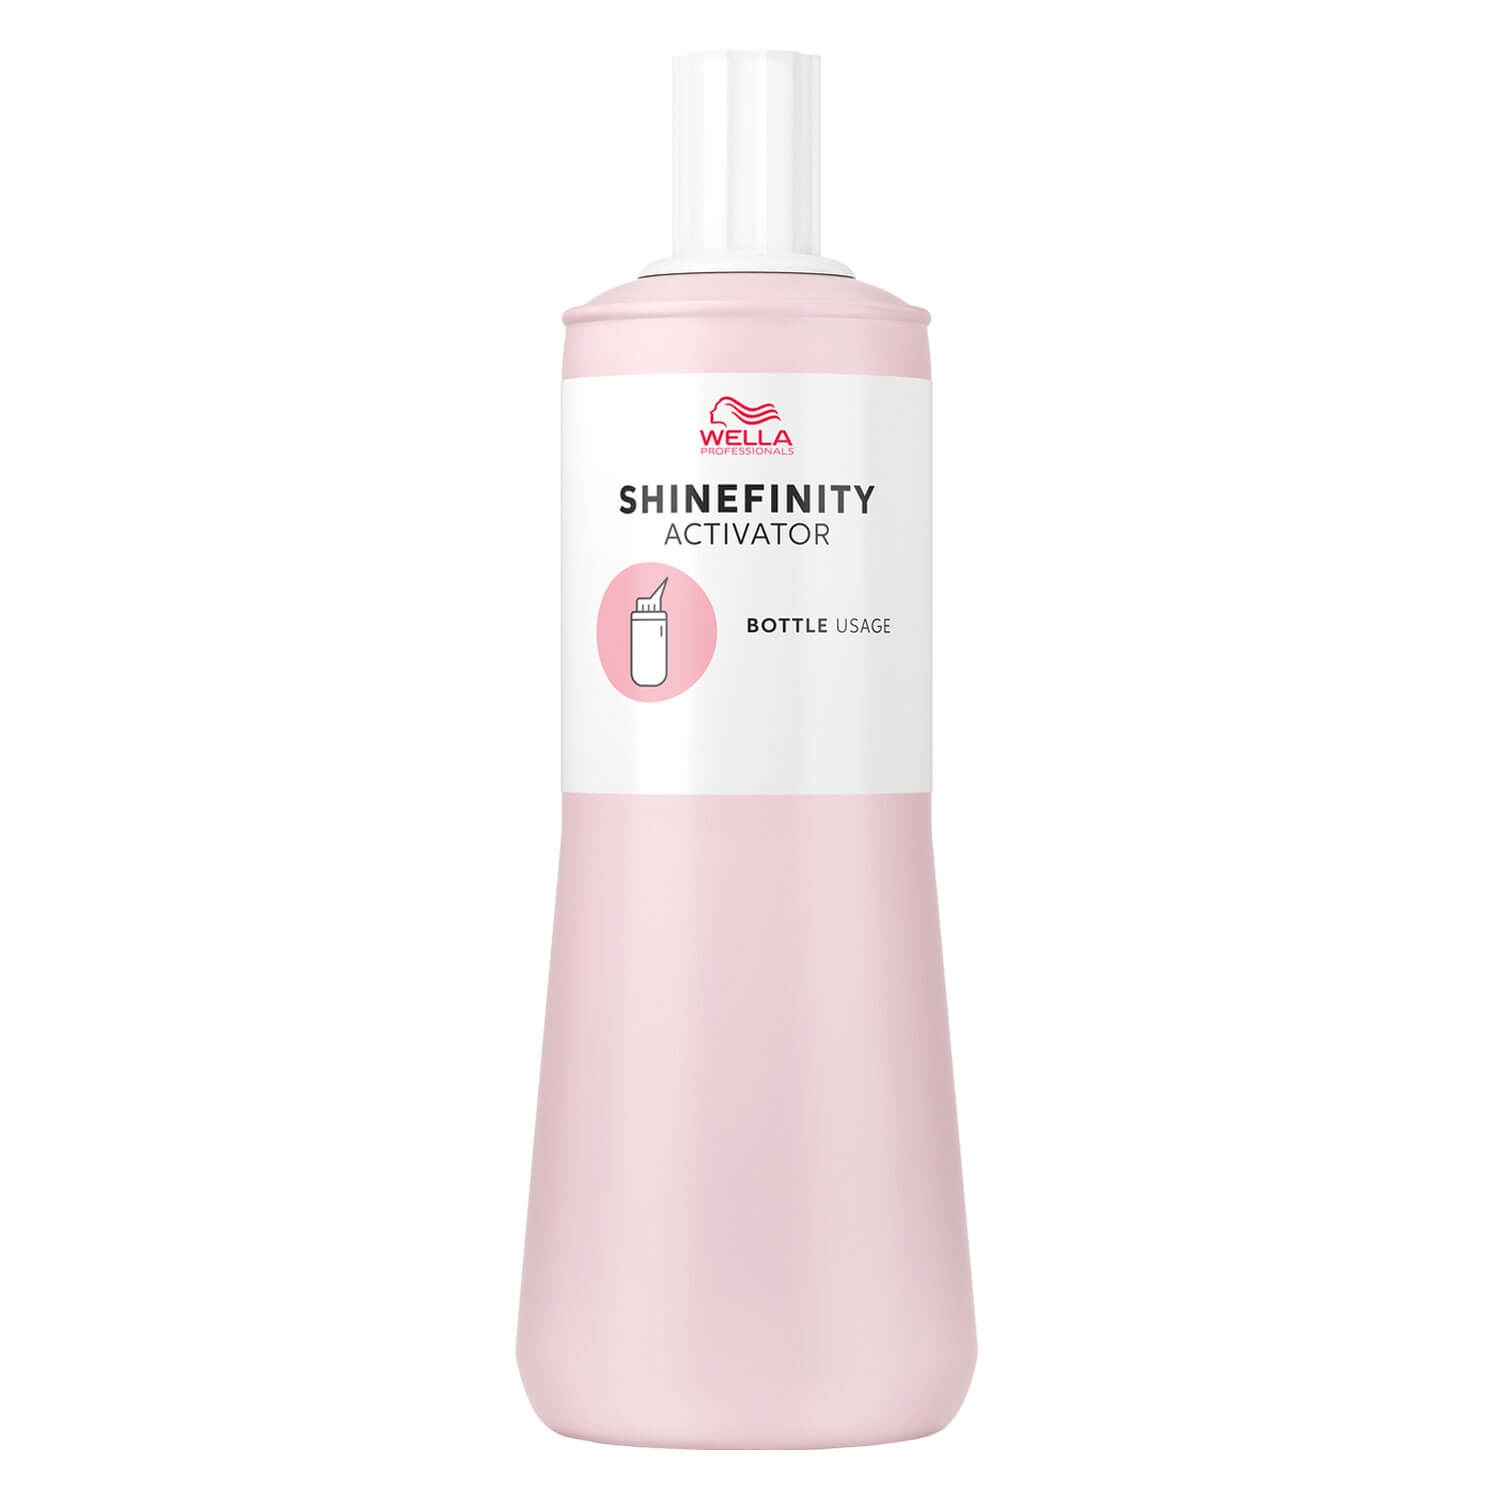 Image du produit de Shinefinity - Activator Bottle Usage 2%